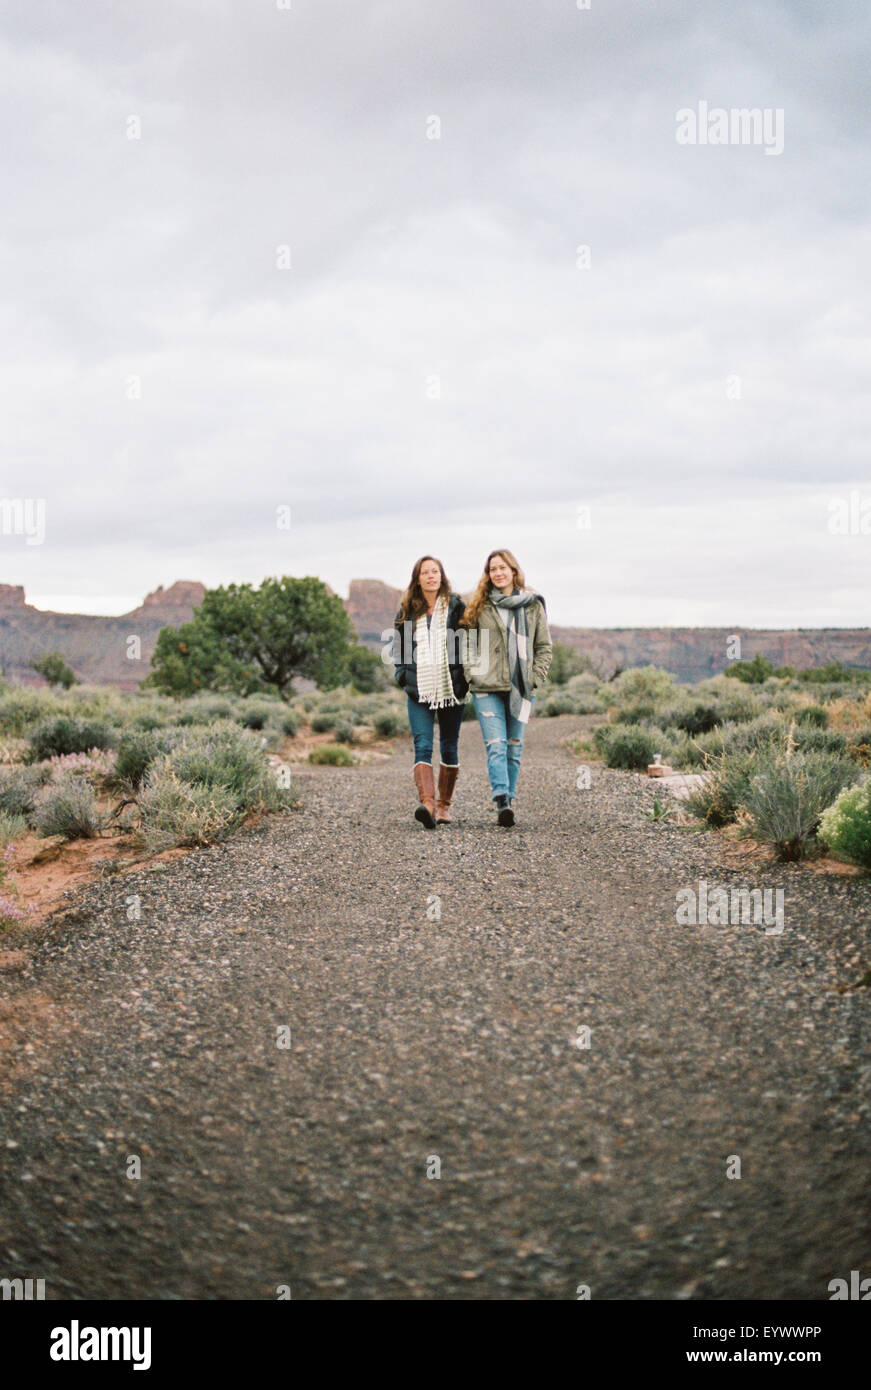 Two women walking down a dirt road in a desert. Stock Photo